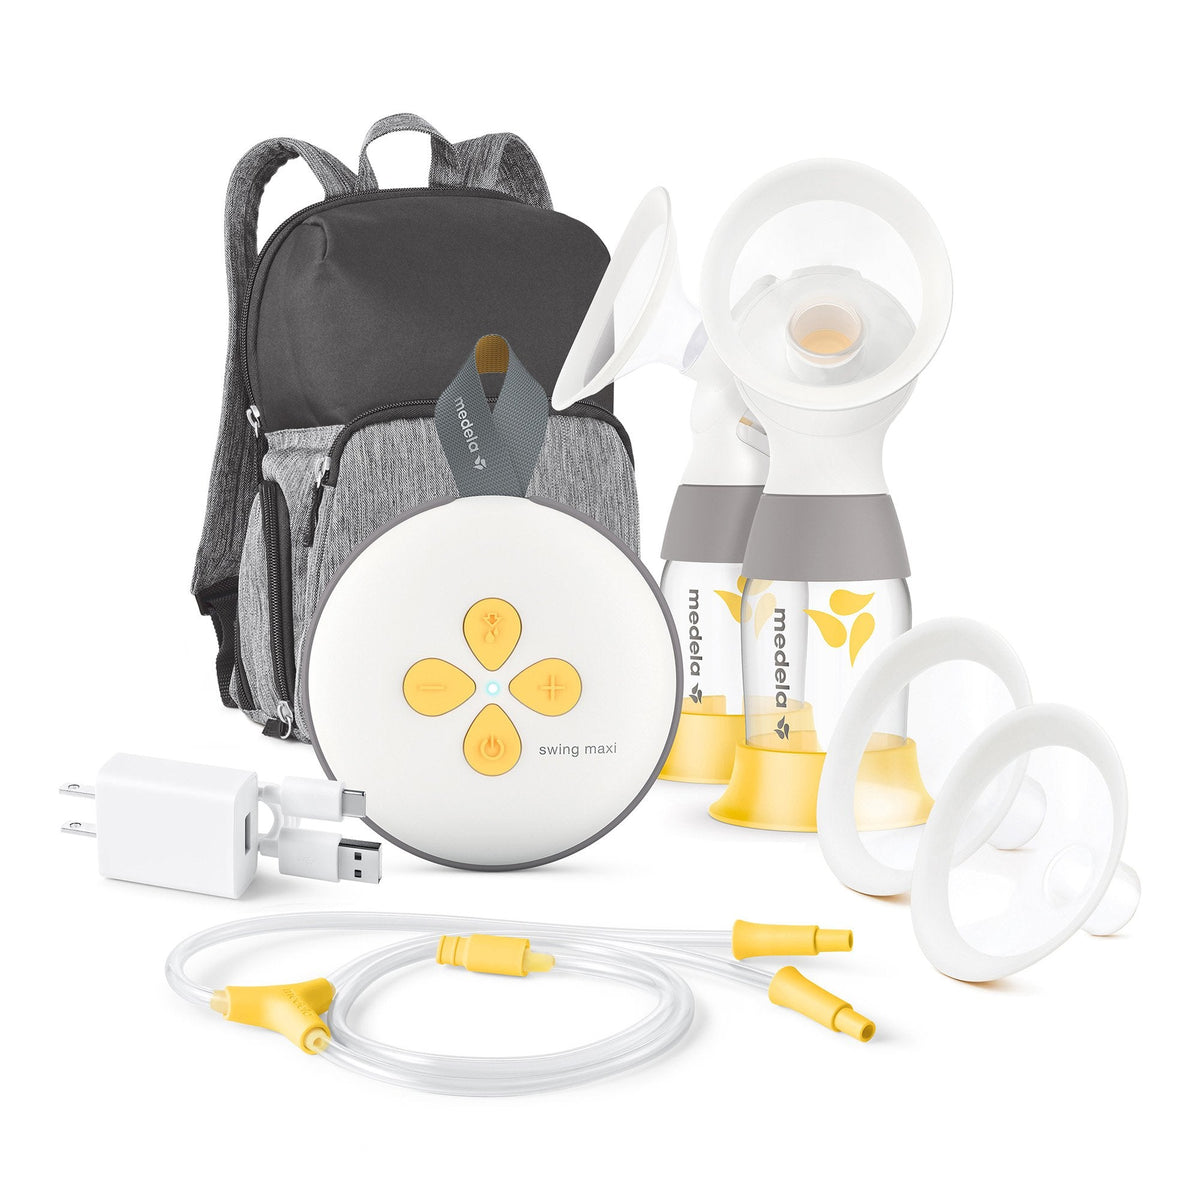 Medela Double-Electric Breast Pump Kit Swing Maxi | American Hospital Supply - American Hospital Supply